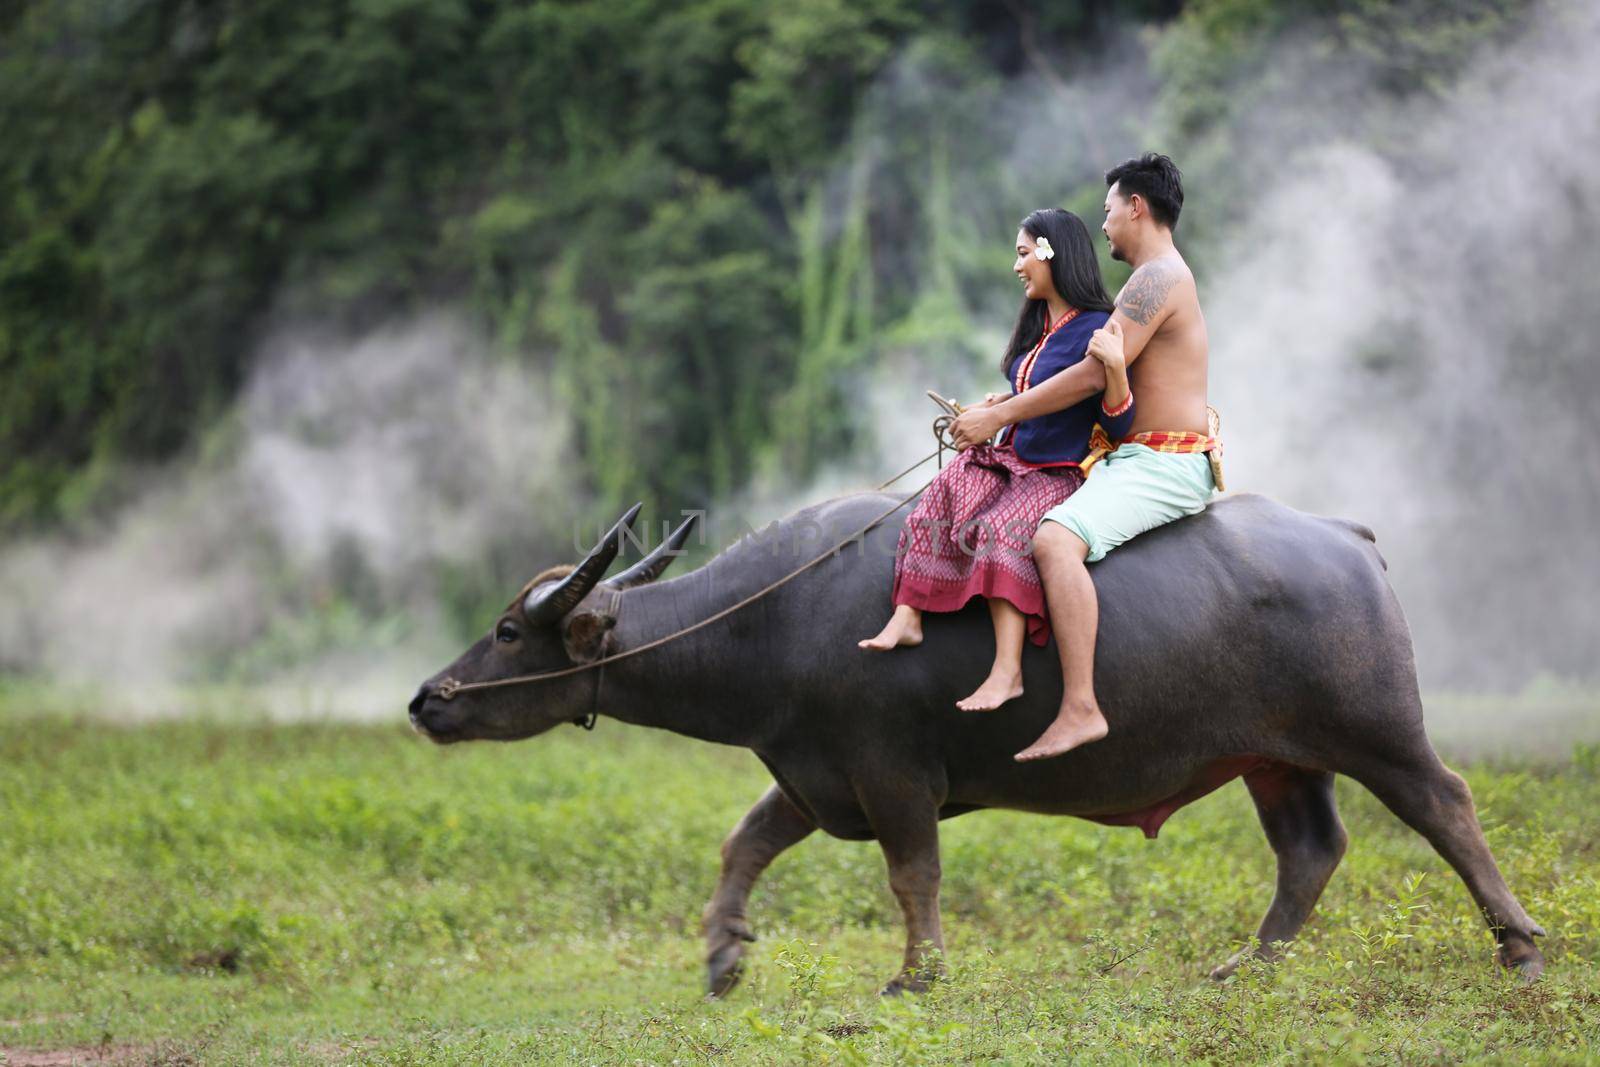 Couple farmer in farmer suit with buffalo, Thailand countryside by chuanchai